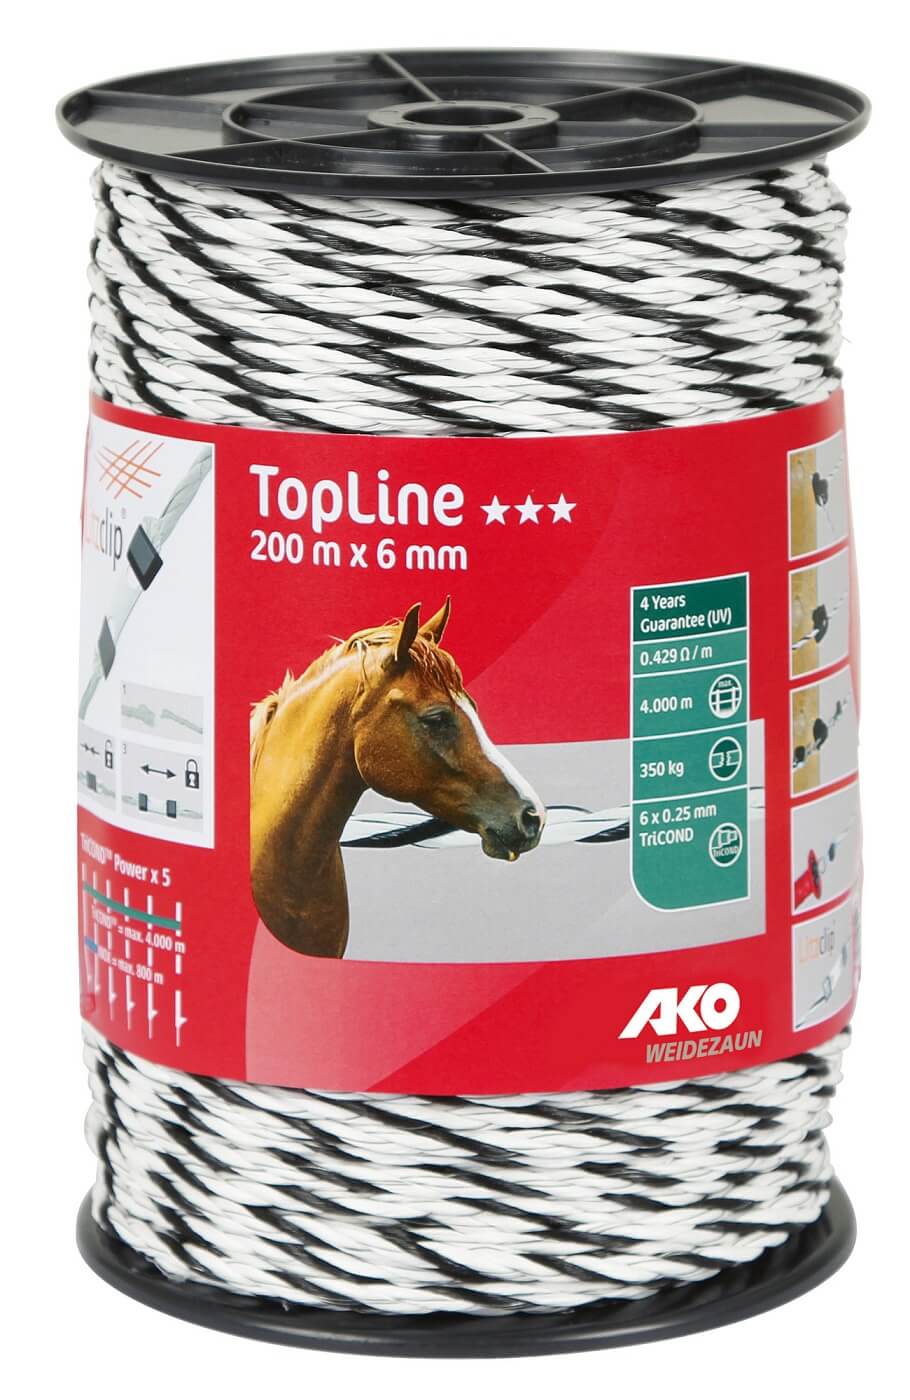 AKO TopLine Plus Weidezaunseil Ø 6 mm, 200 m - weiß / schwarz